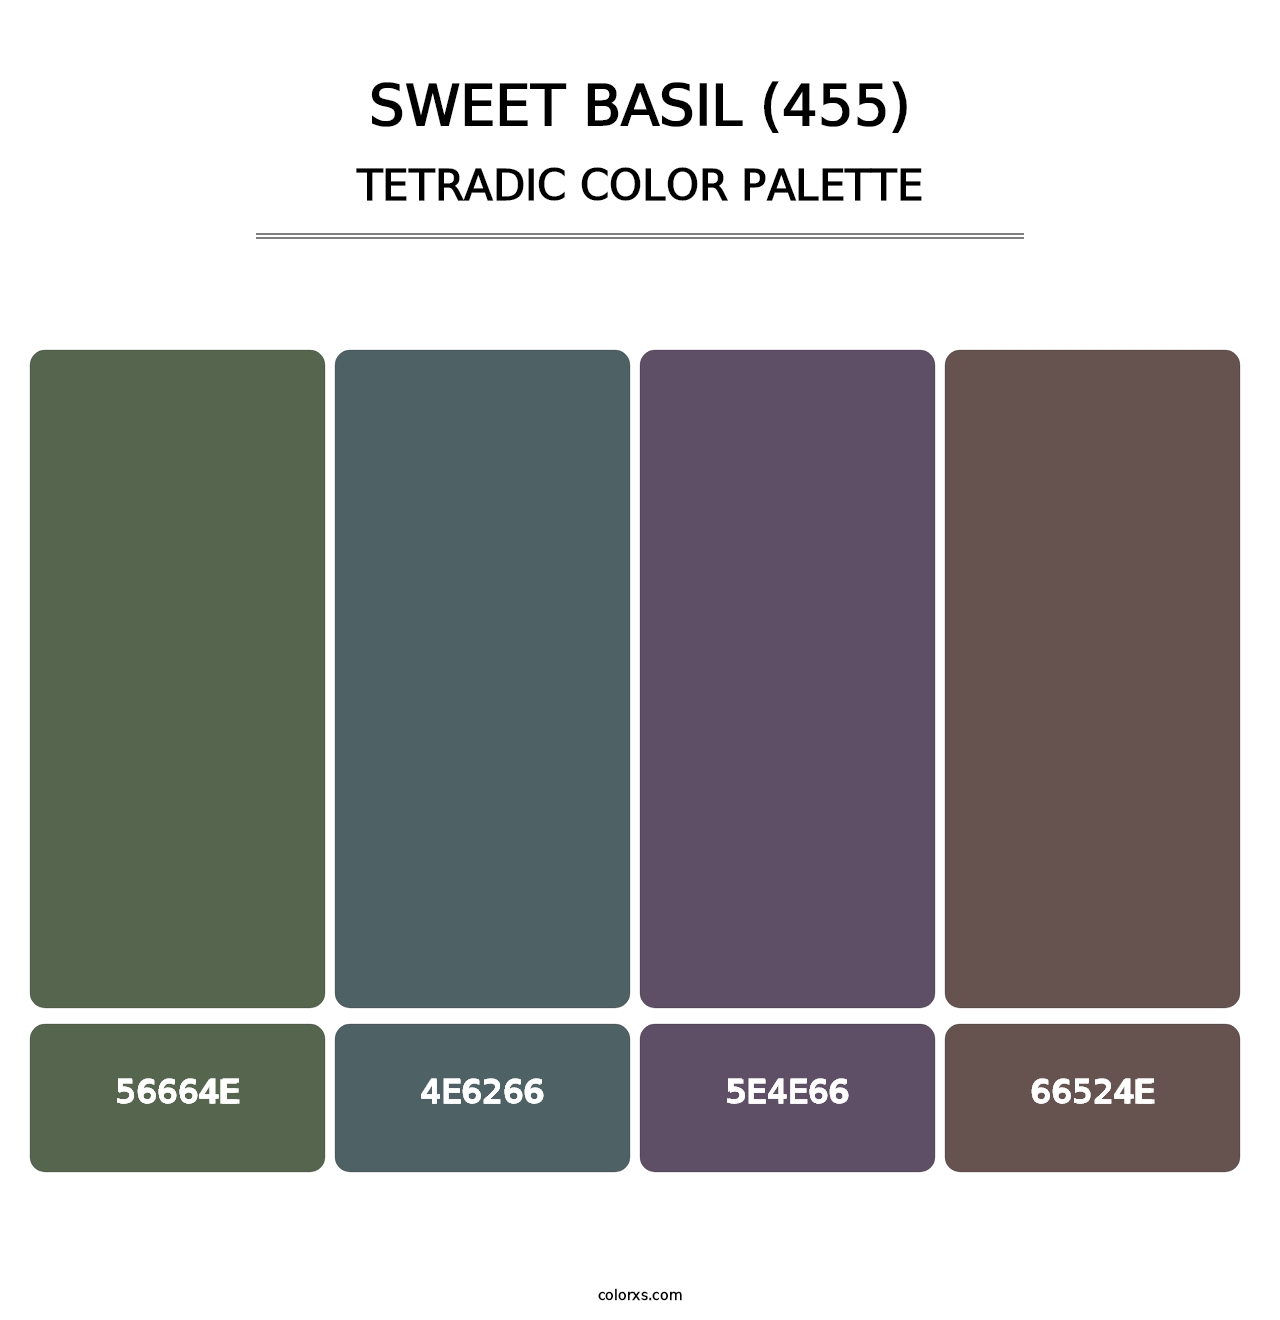 Sweet Basil (455) - Tetradic Color Palette